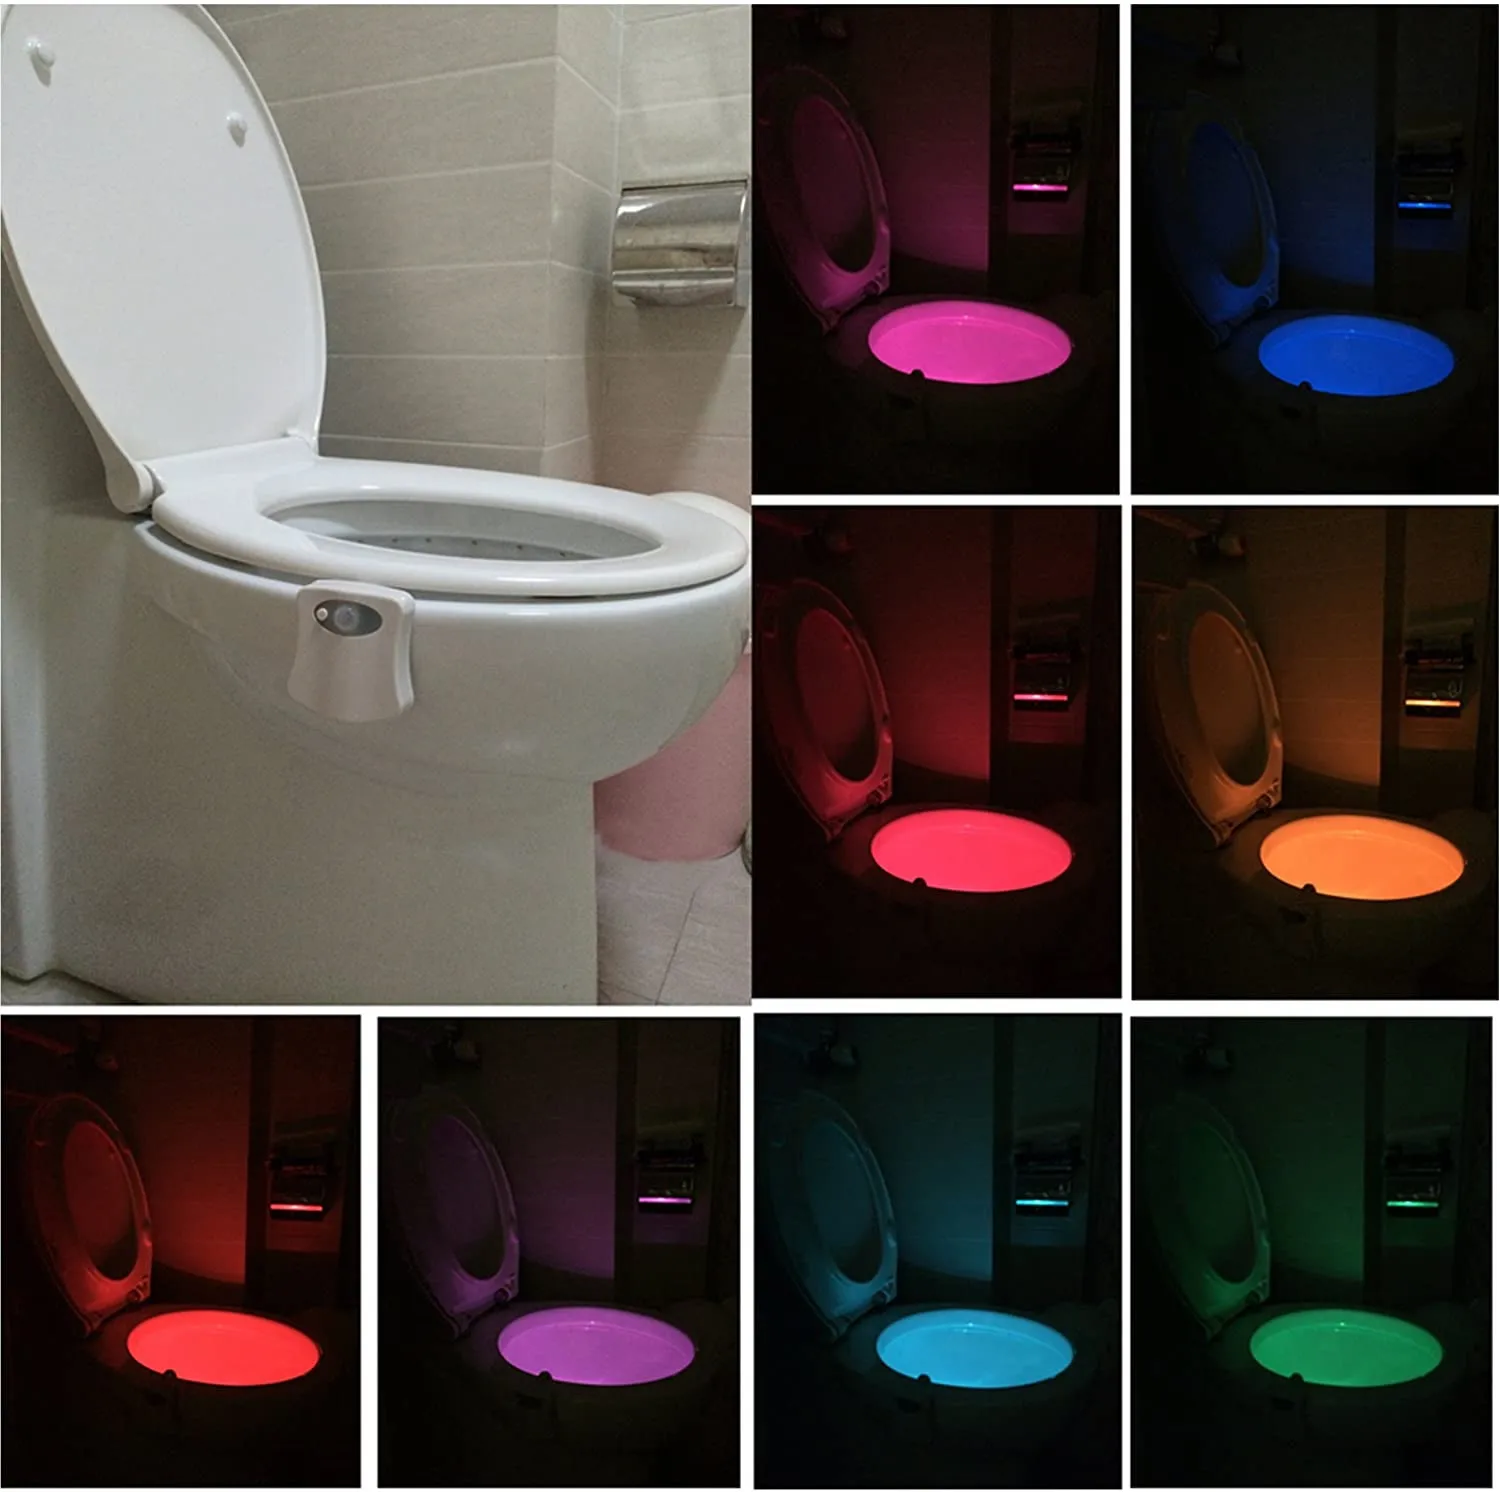 https://ae01.alicdn.com/kf/S679603f96f2843f99fd004913de035b0A/Smart-PIR-Motion-Sensor-Toilet-Seat-Night-Light-8-16-Color-Waterproof-Backlight-for-Toilet-Bowl.jpg